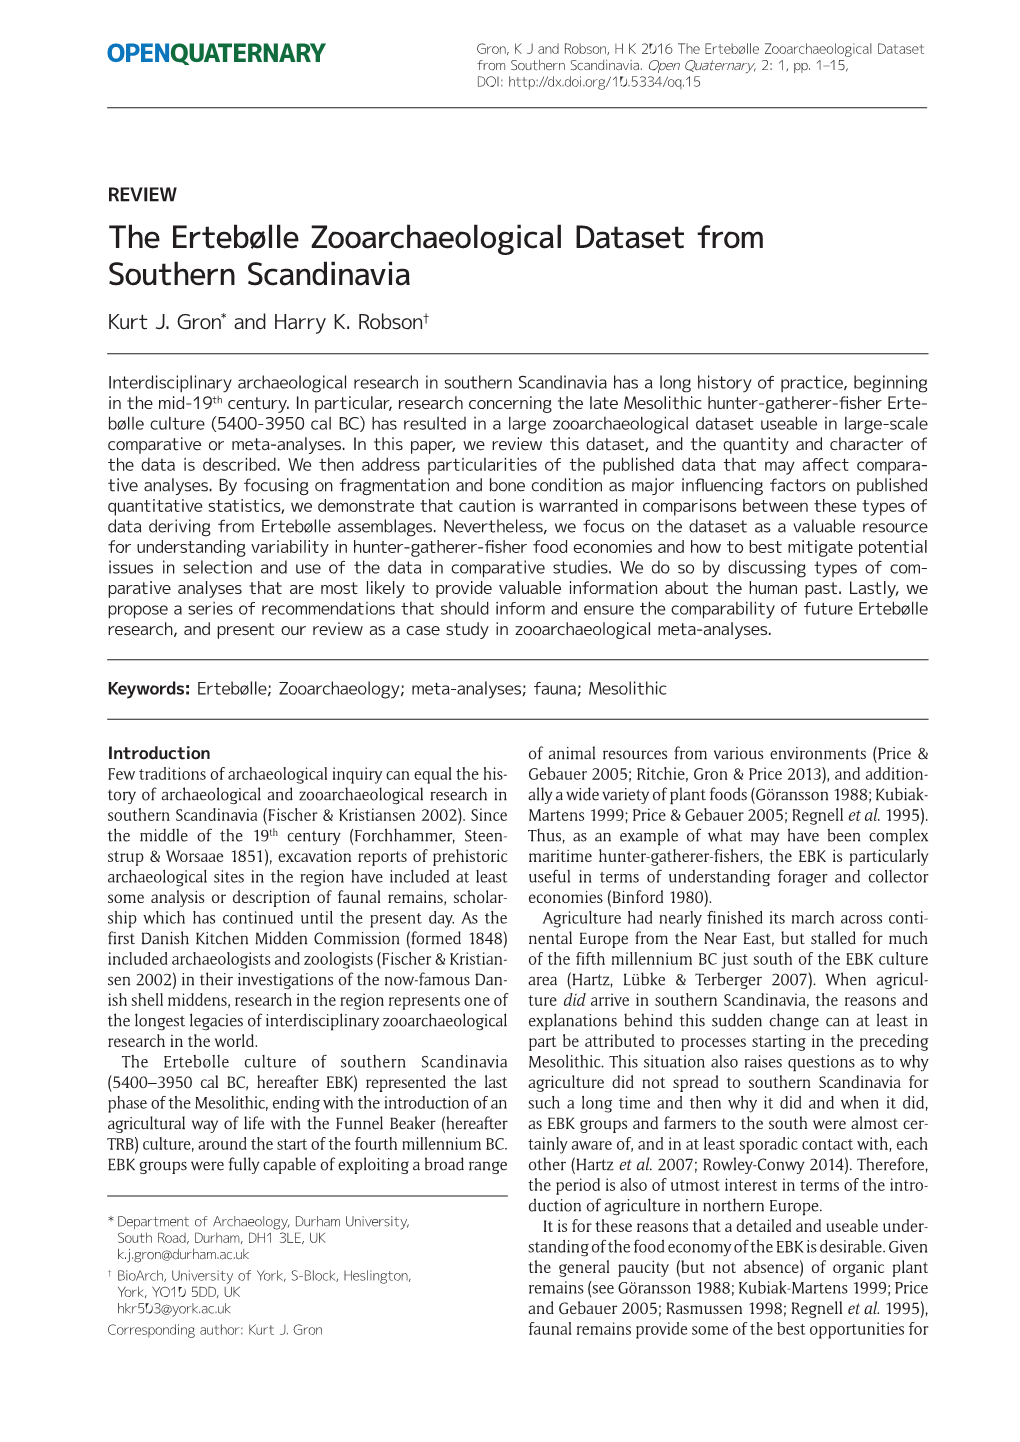 The Ertebølle Zooarchaeological Dataset from Southern Scandinavia